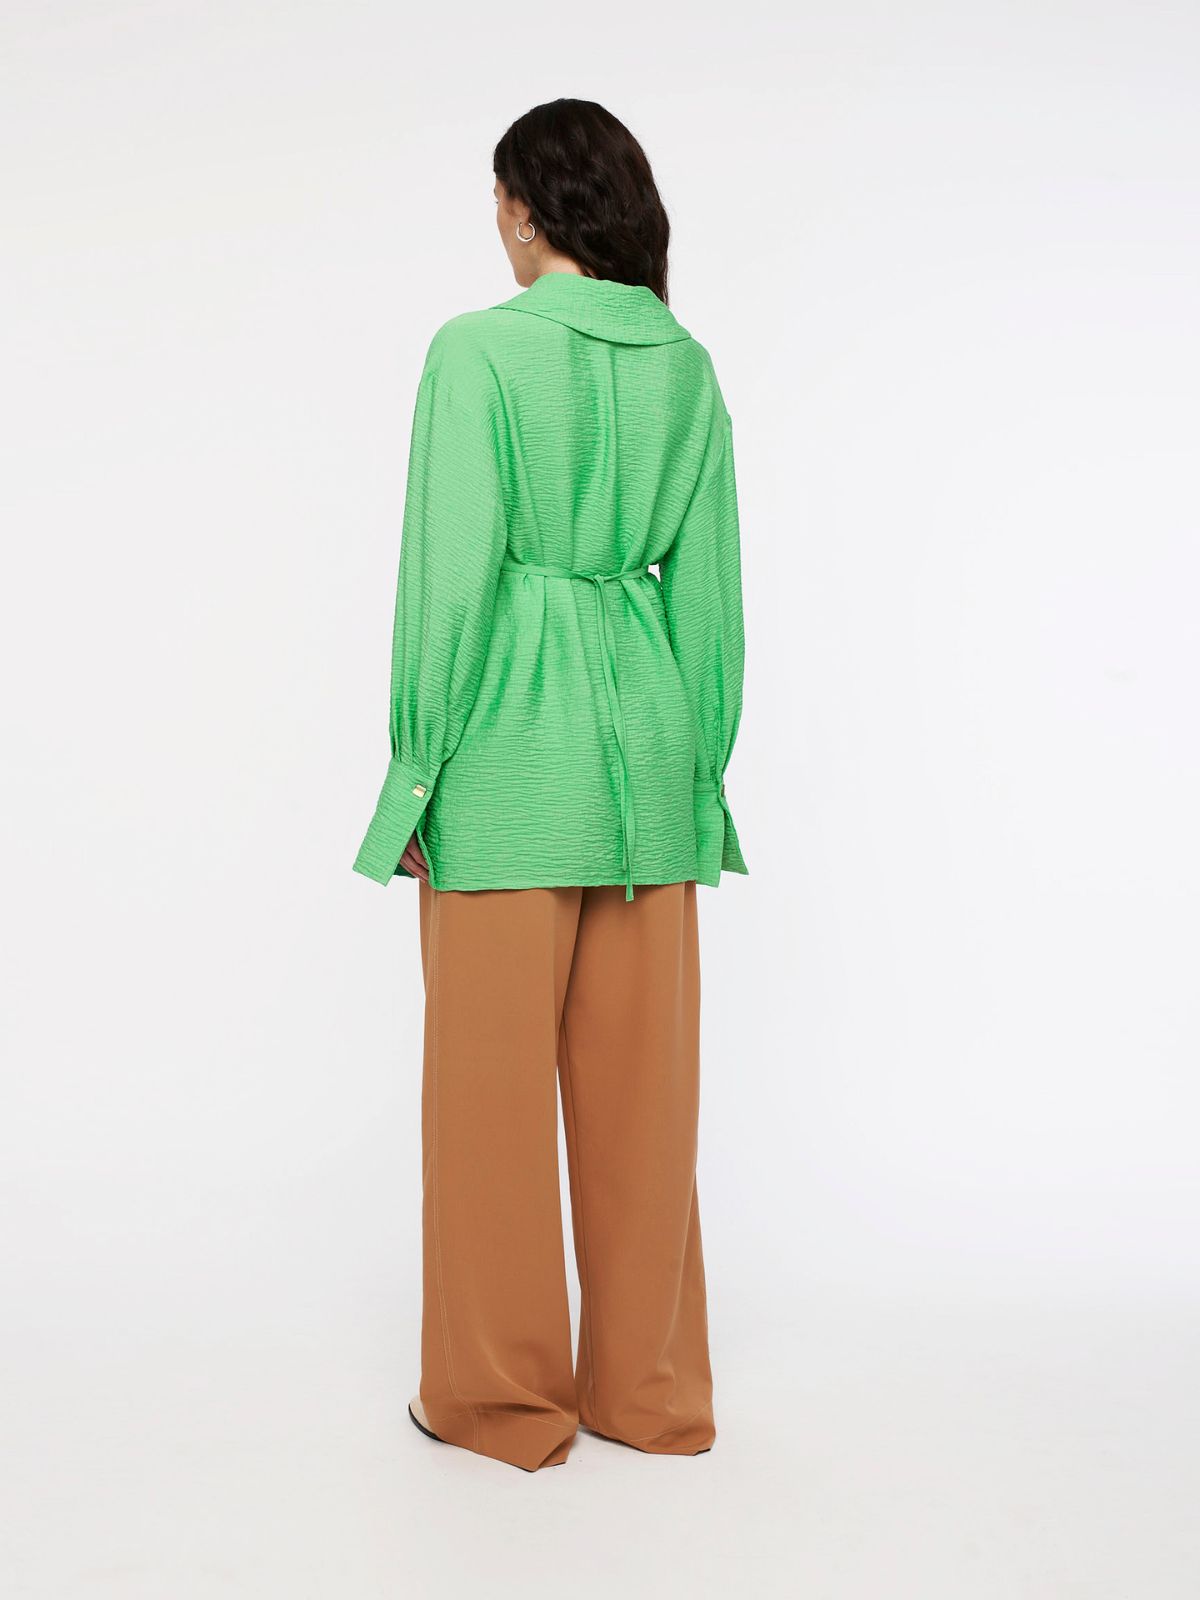 FARO blouse - jade